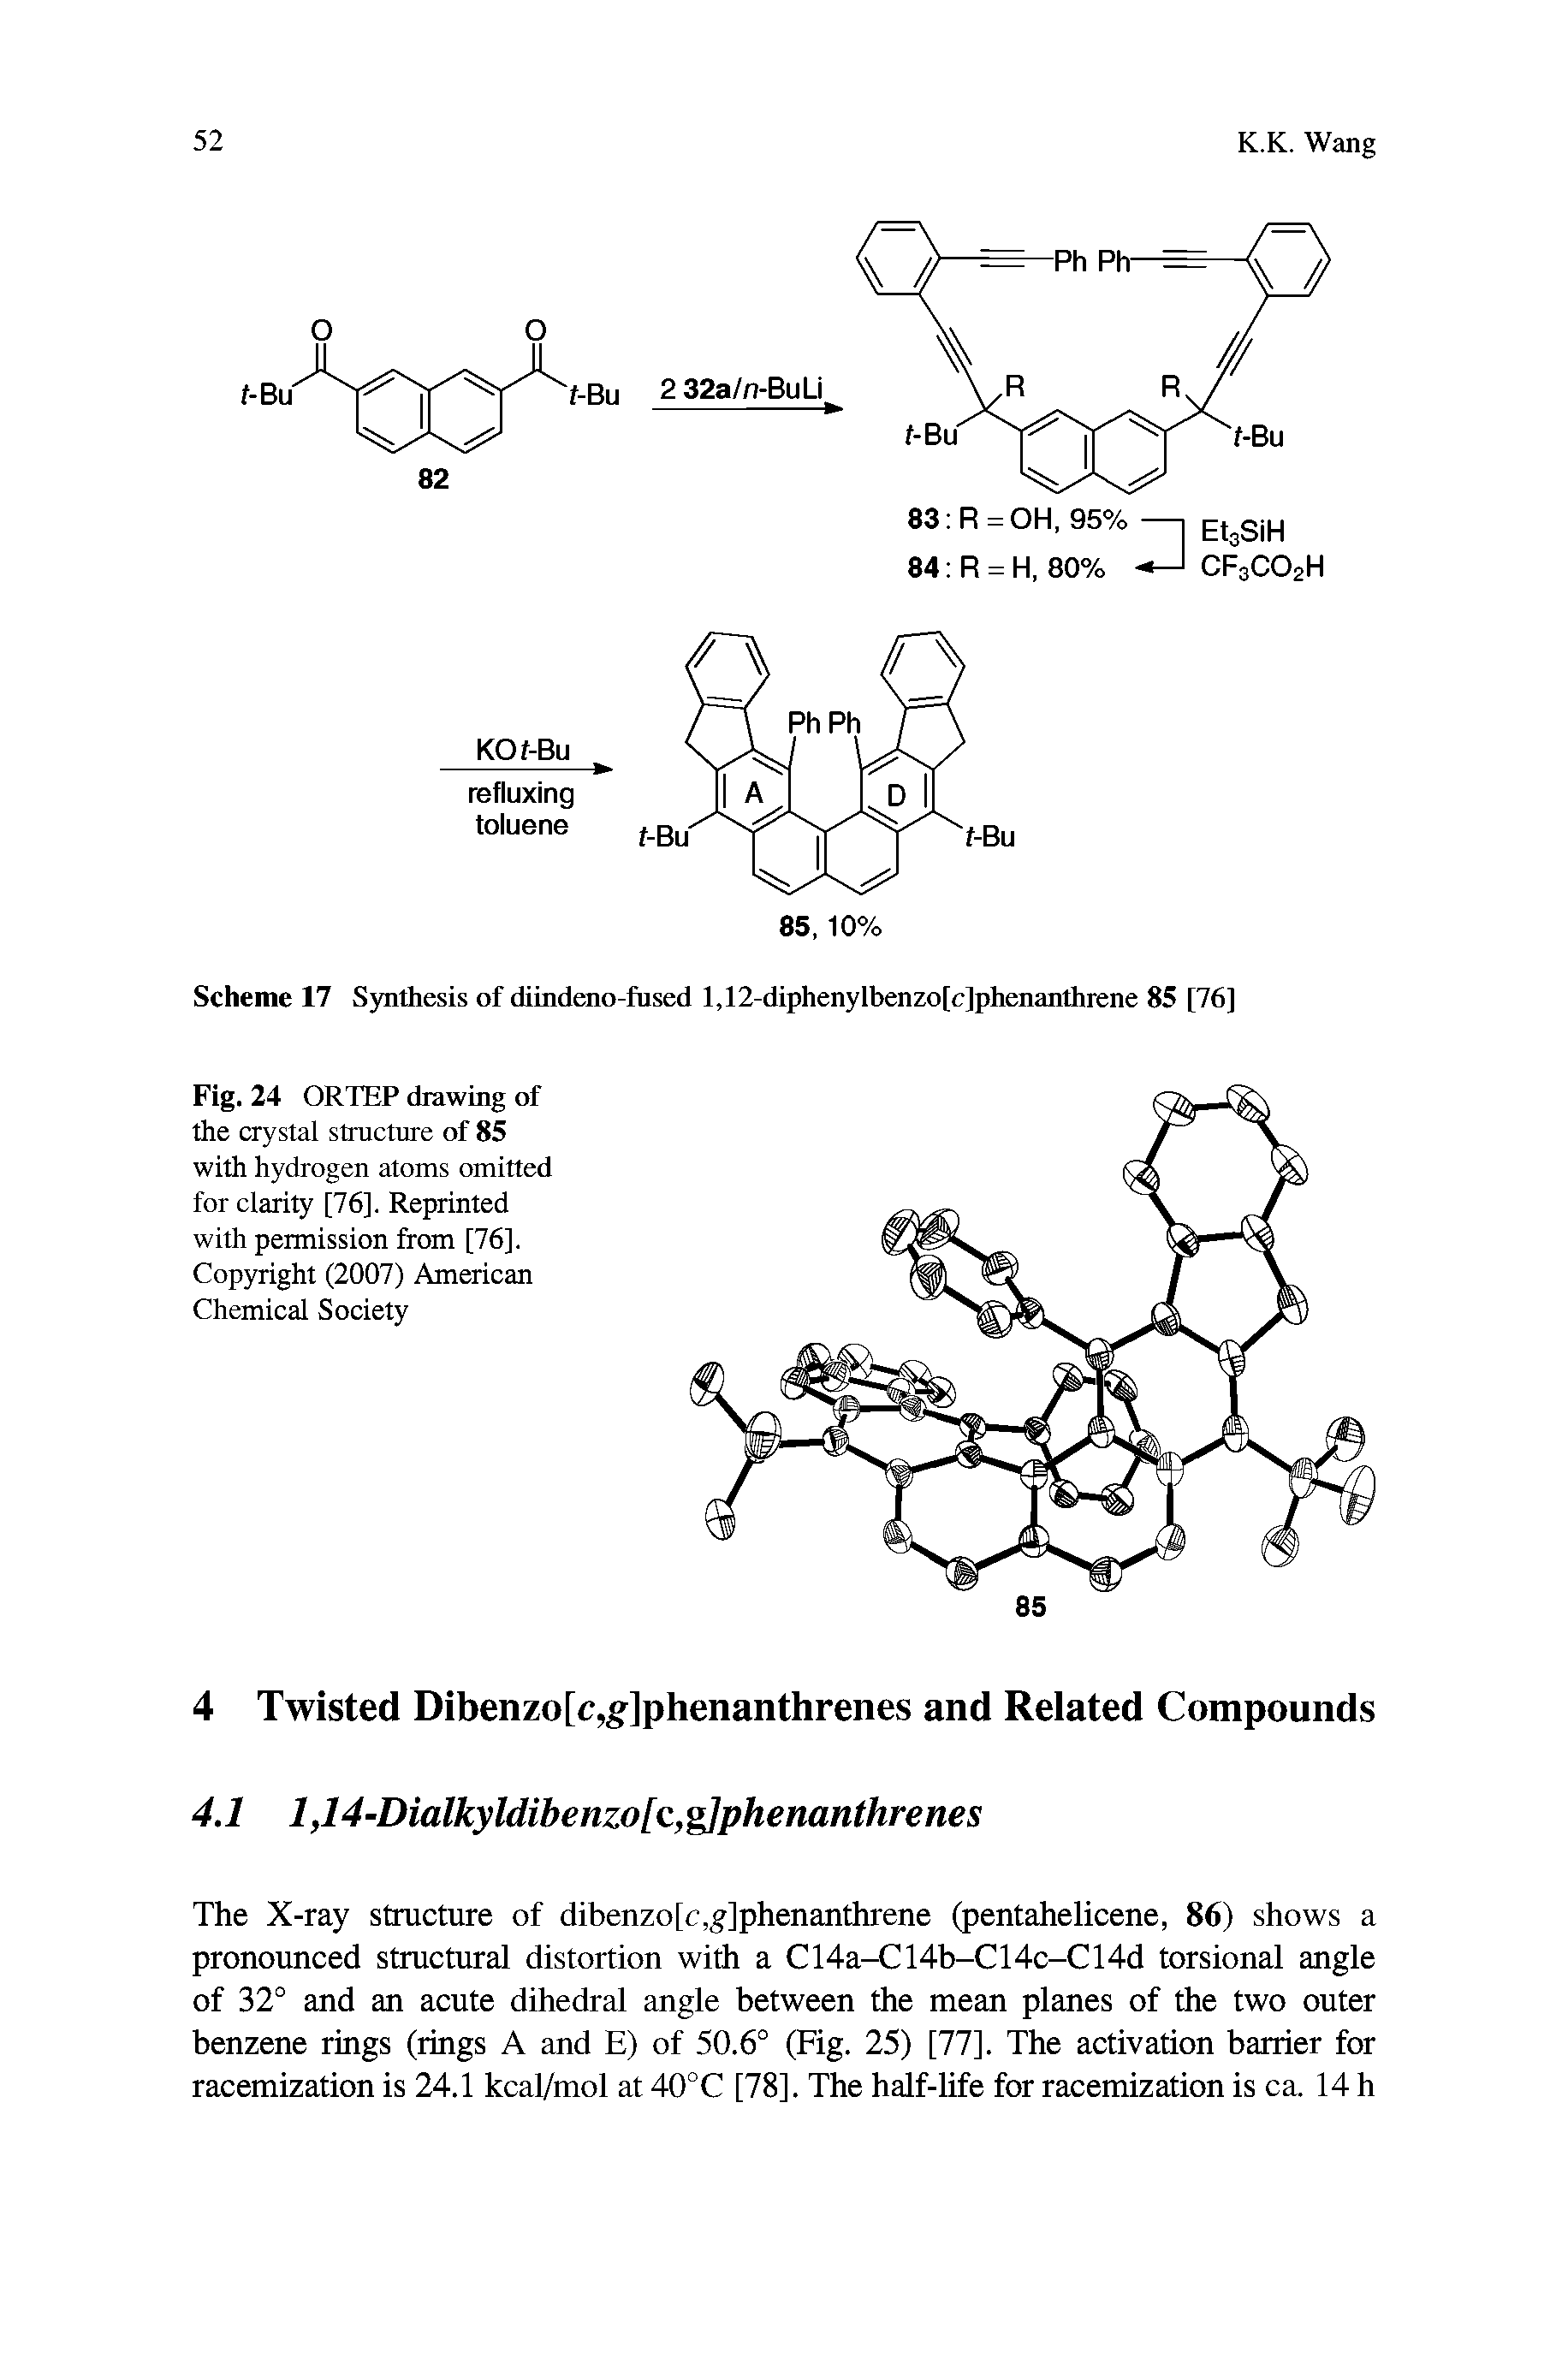 Scheme 17 Synthesis of diindeno-fiised l,12-diphenylbenzo[c]phenanthrene 85 [76]...